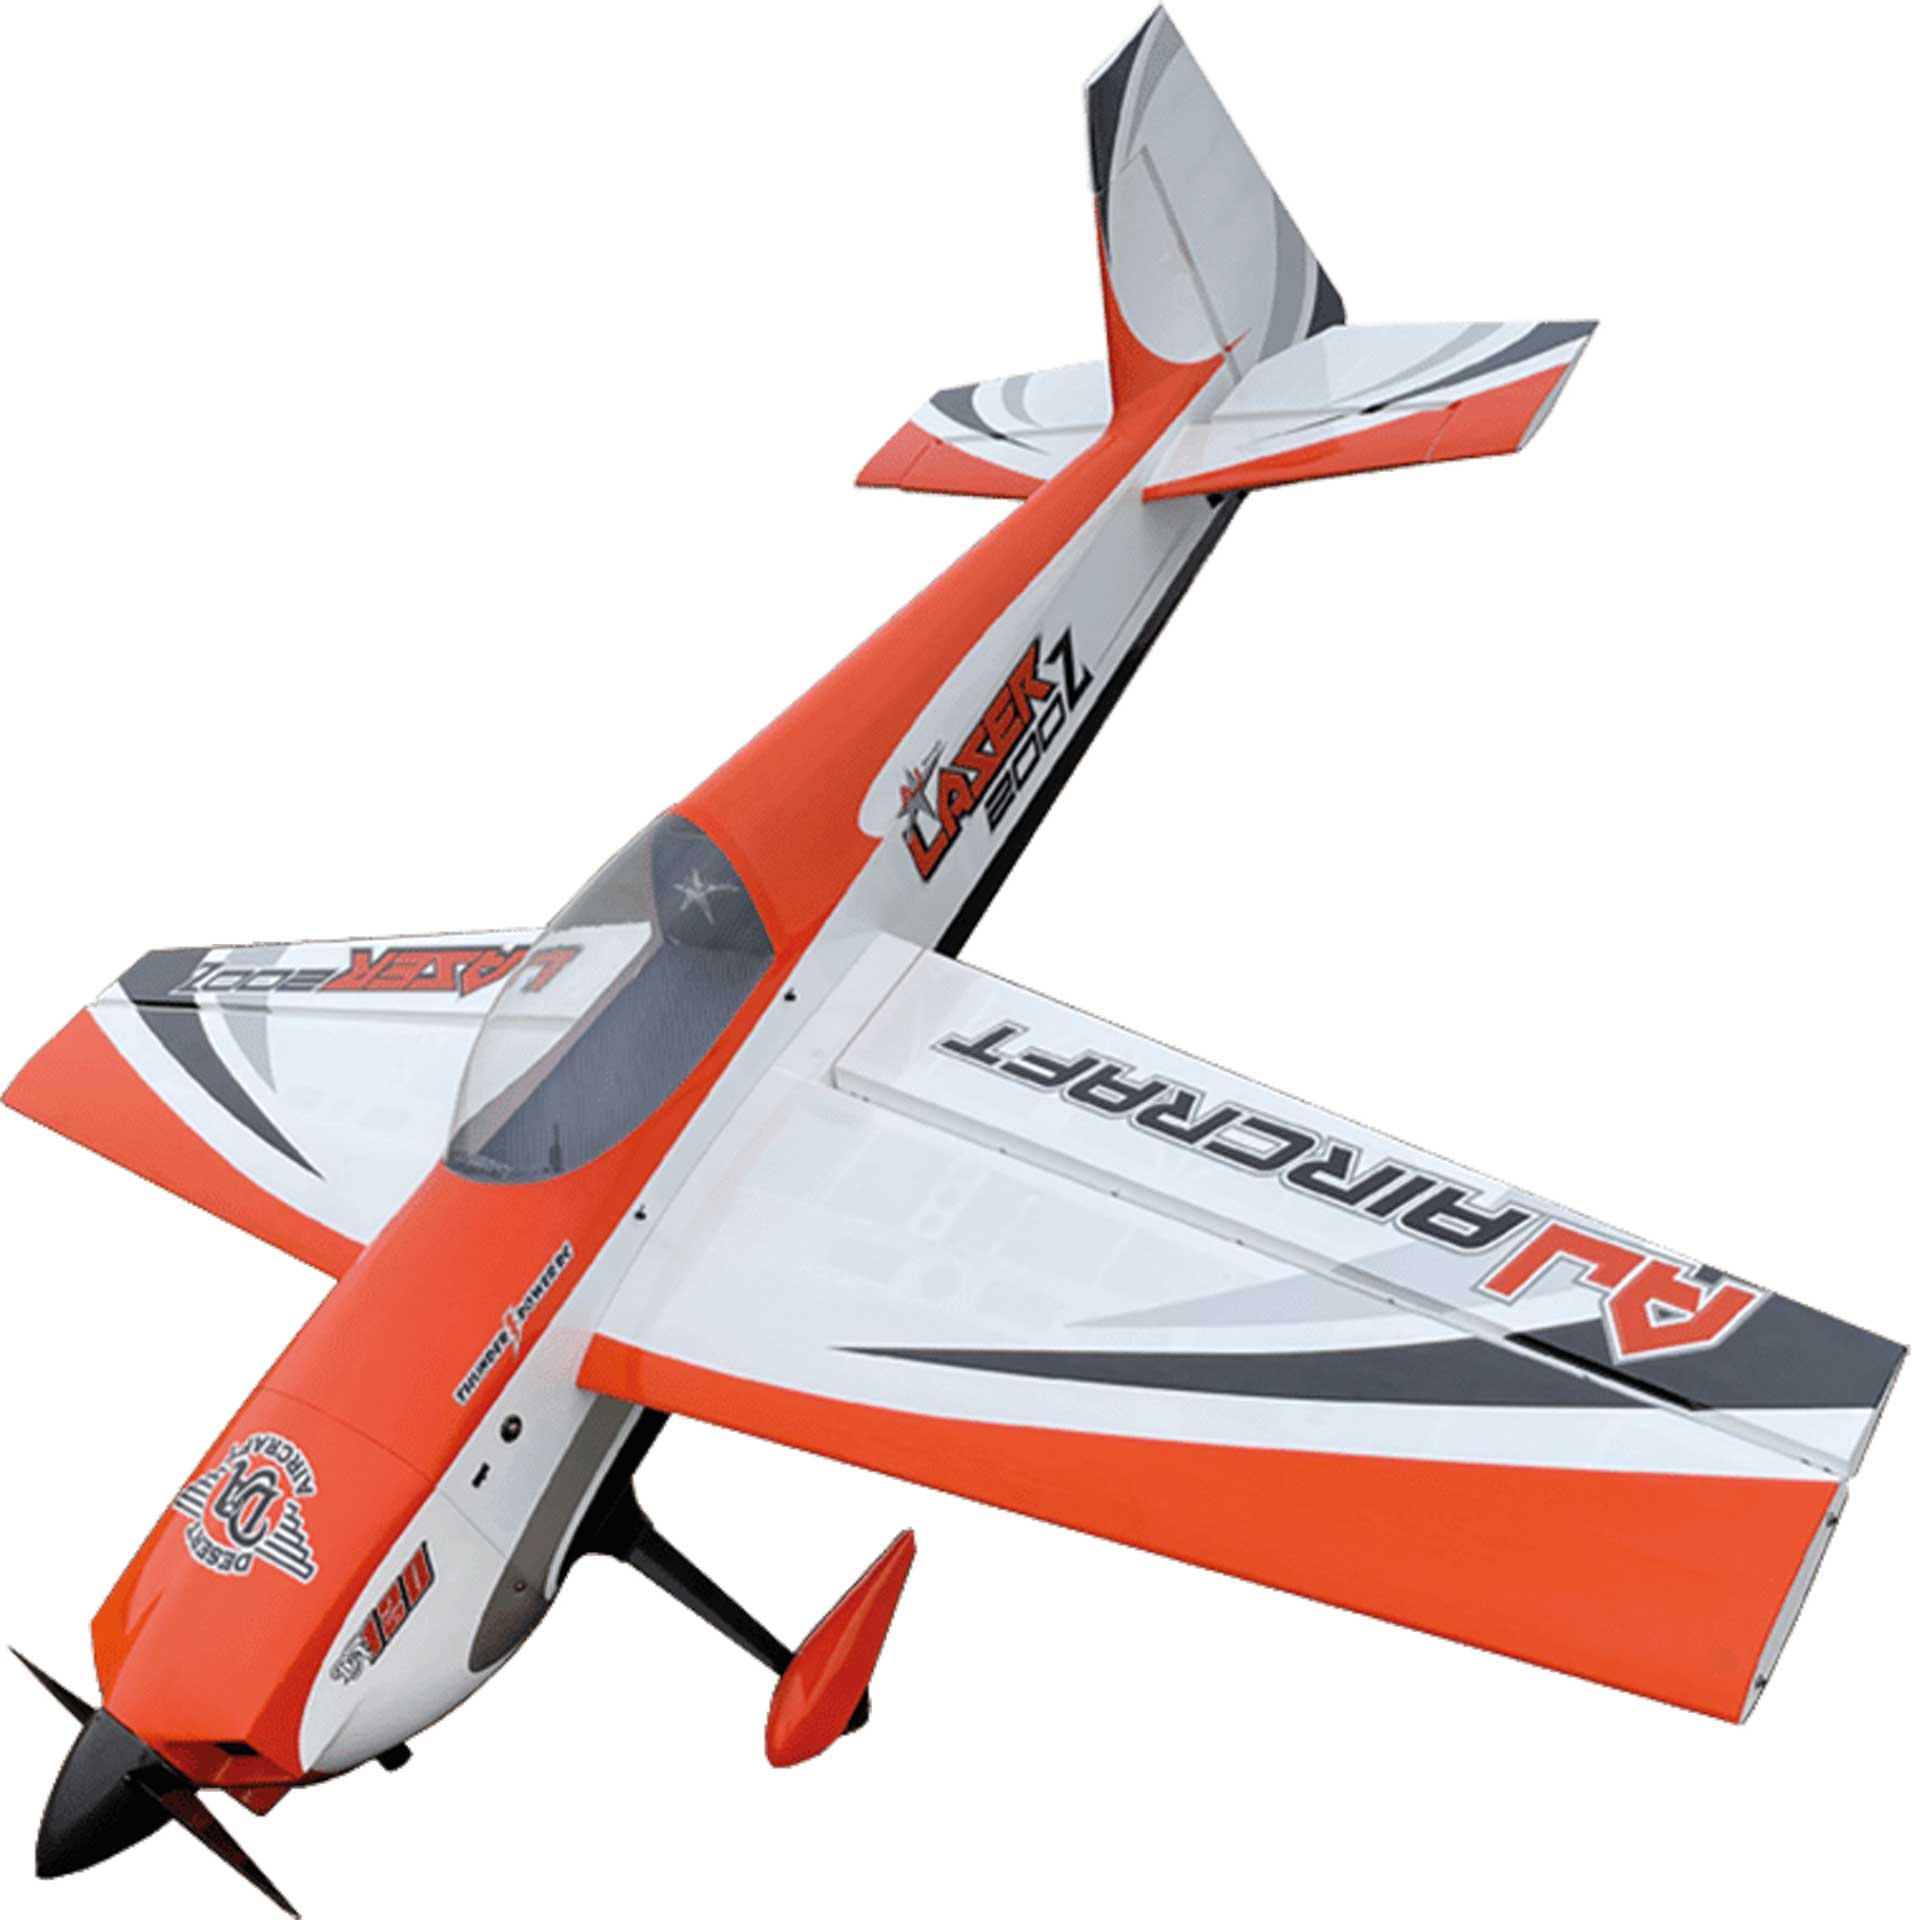 AJ AIRCRAFT Laser z200 ARF 103" Orange Aerobatic model 2,61m